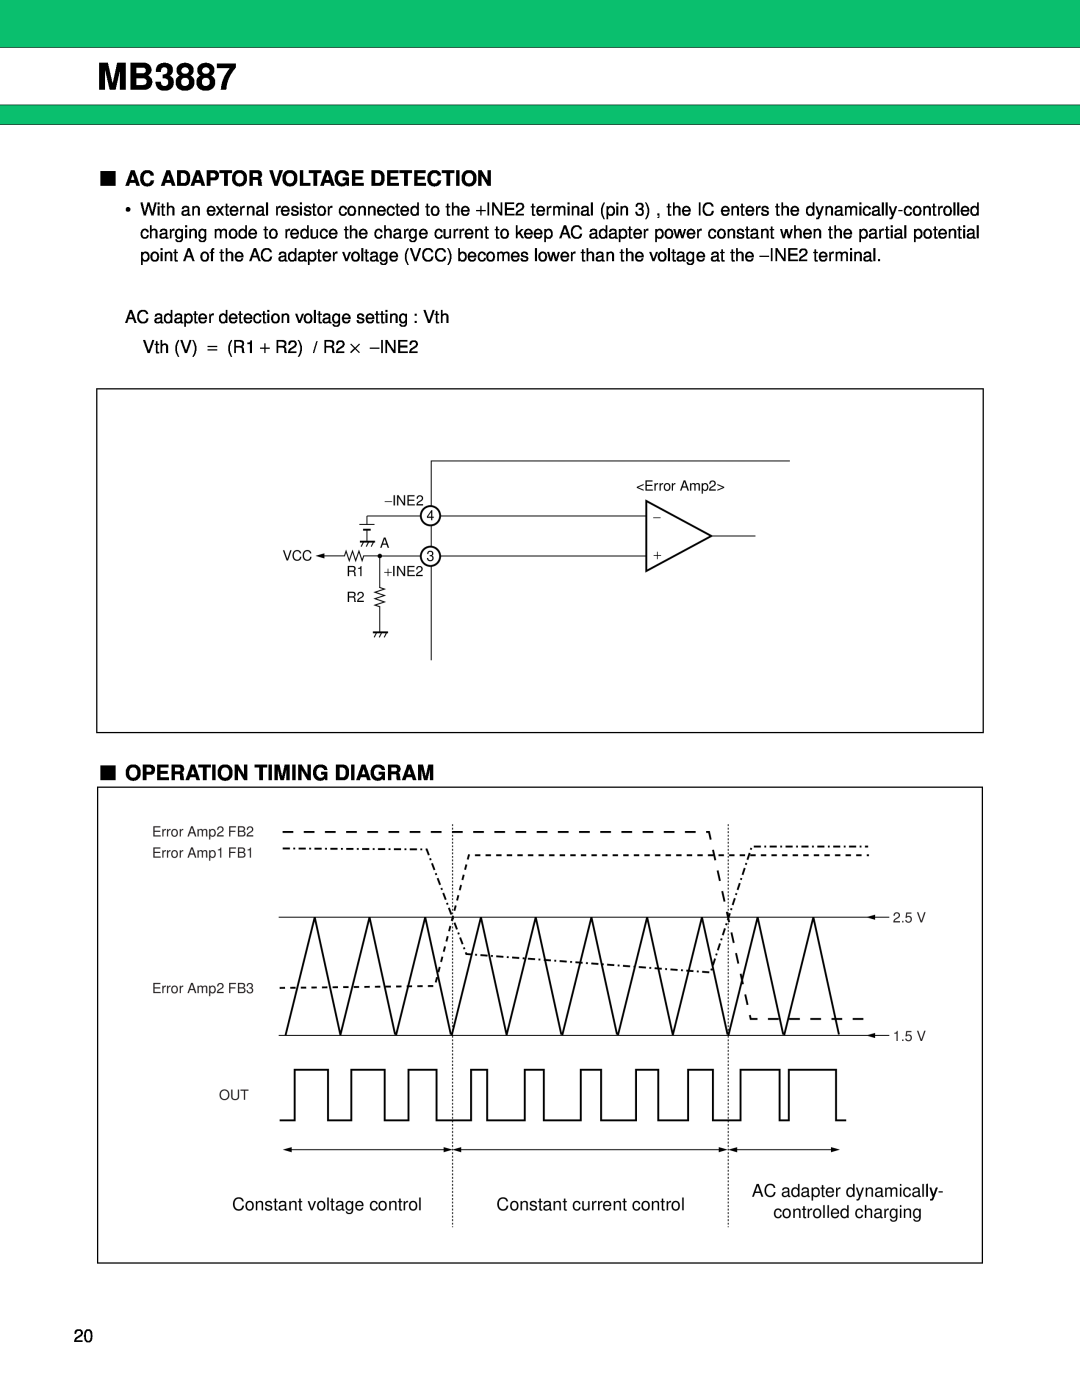 Fujitsu MB3887 manual Ac Adaptor Voltage Detection, Operation Timing Diagram 